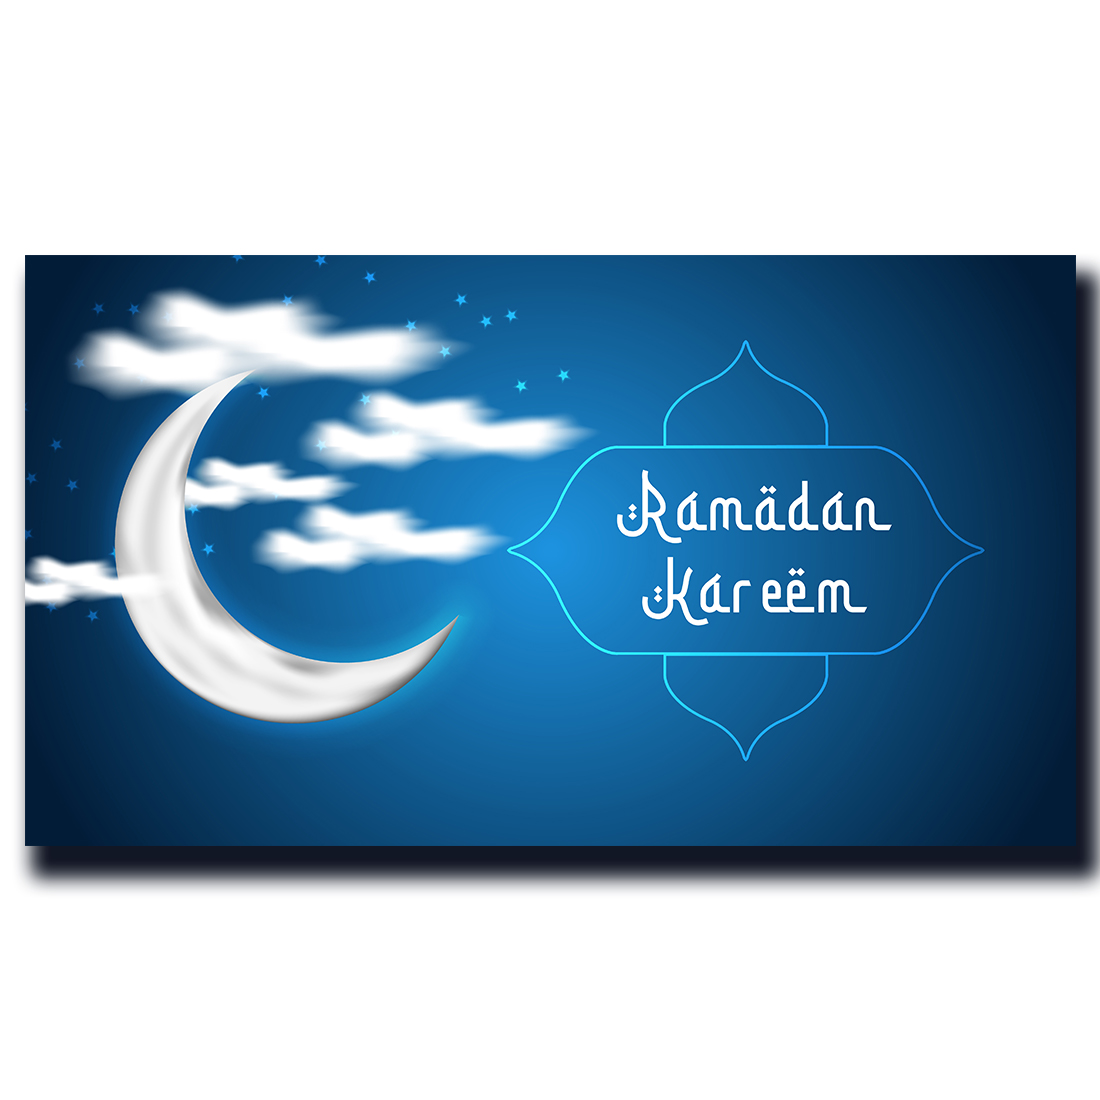 Ramadan kareem greetings banner design with night sky preview image.